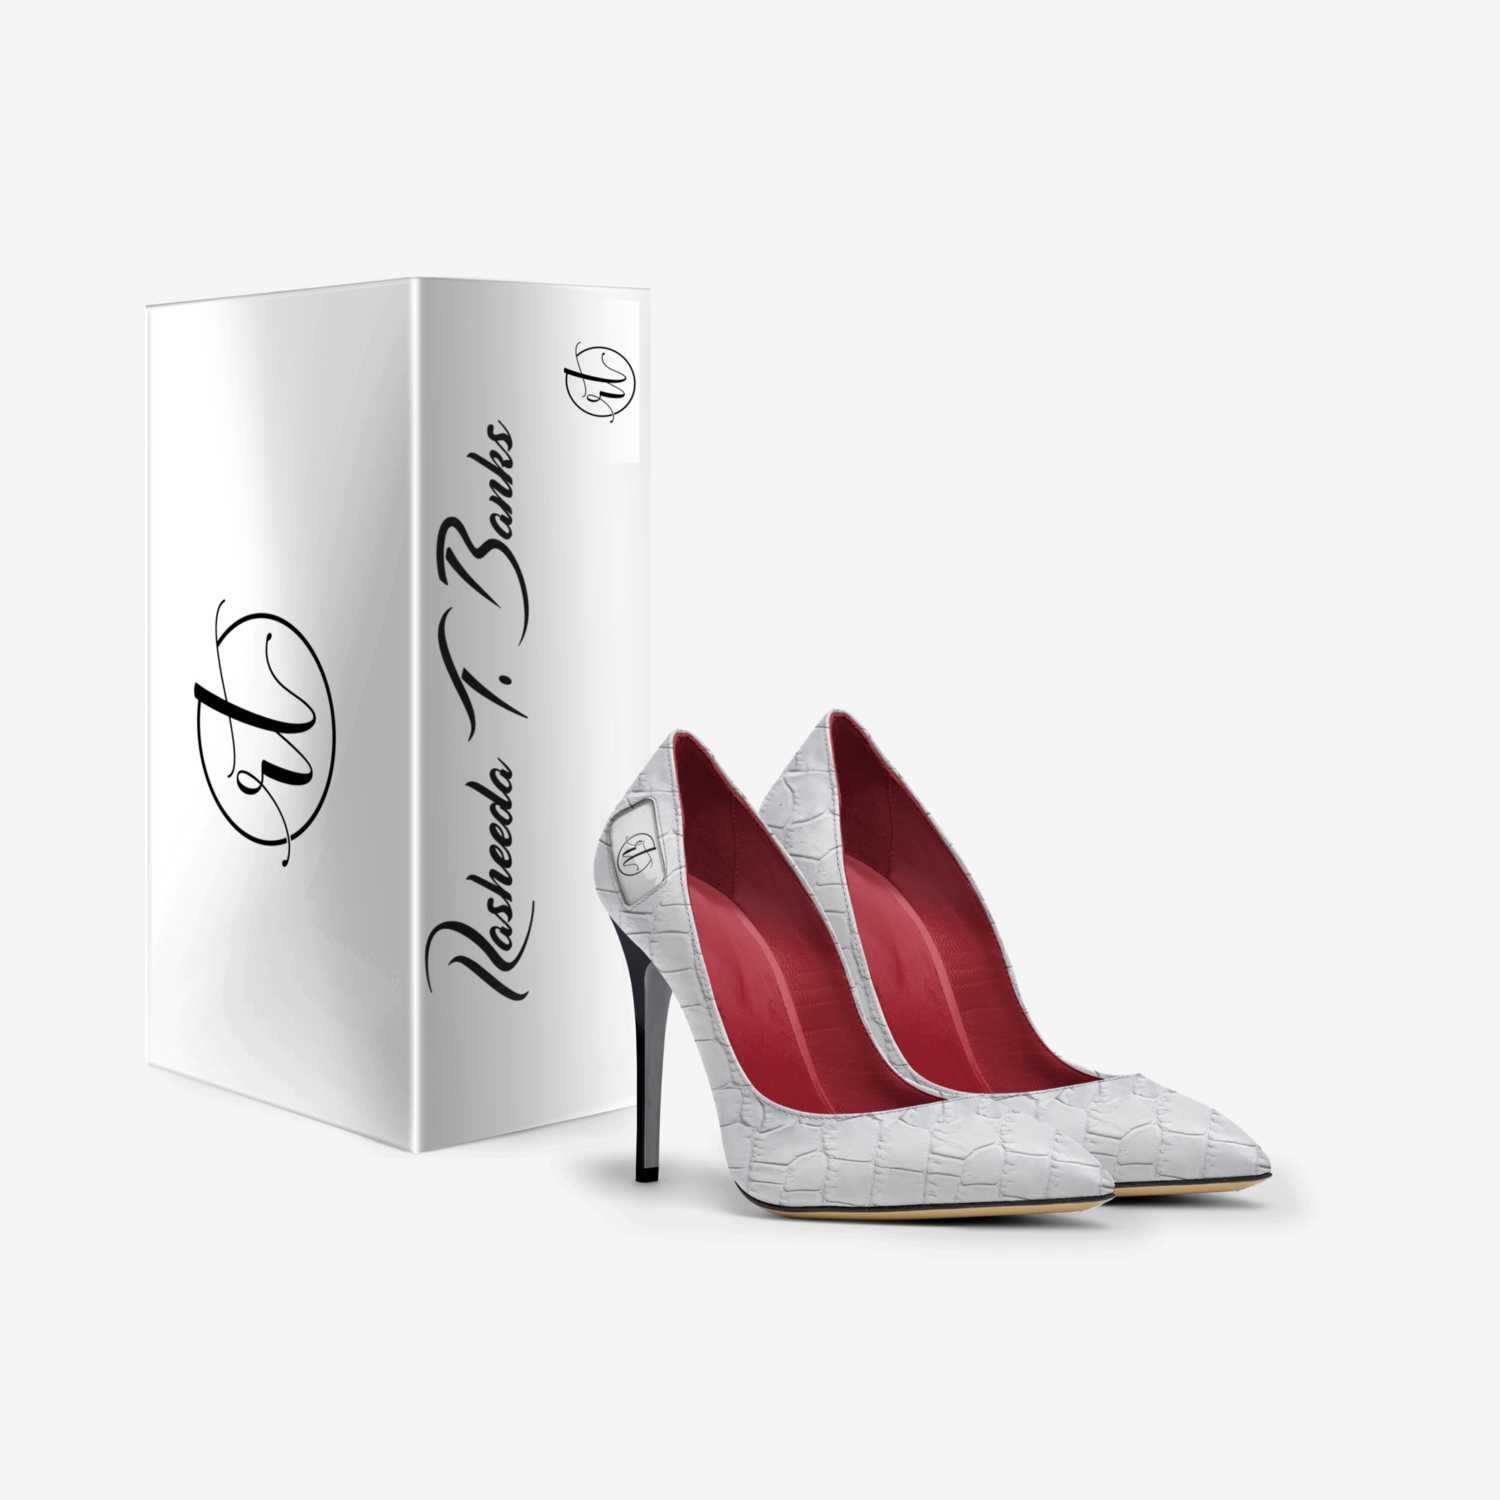 TEINA B. custom made in Italy shoes by Rasheeda T Banks | Box view